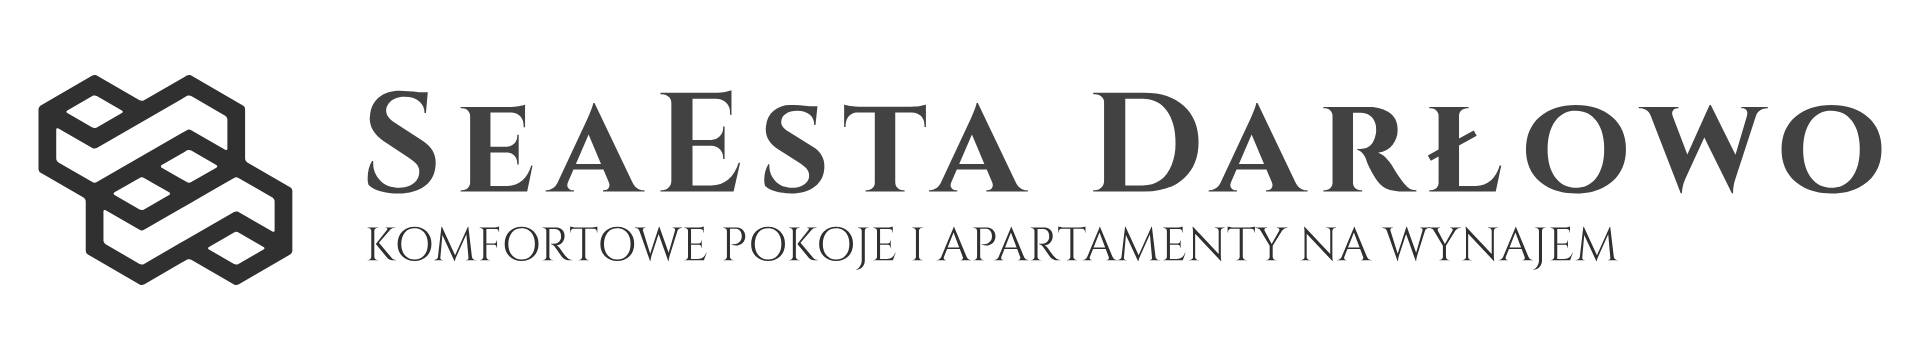 SeaEsta Darłowo - apartamenty nad morzem